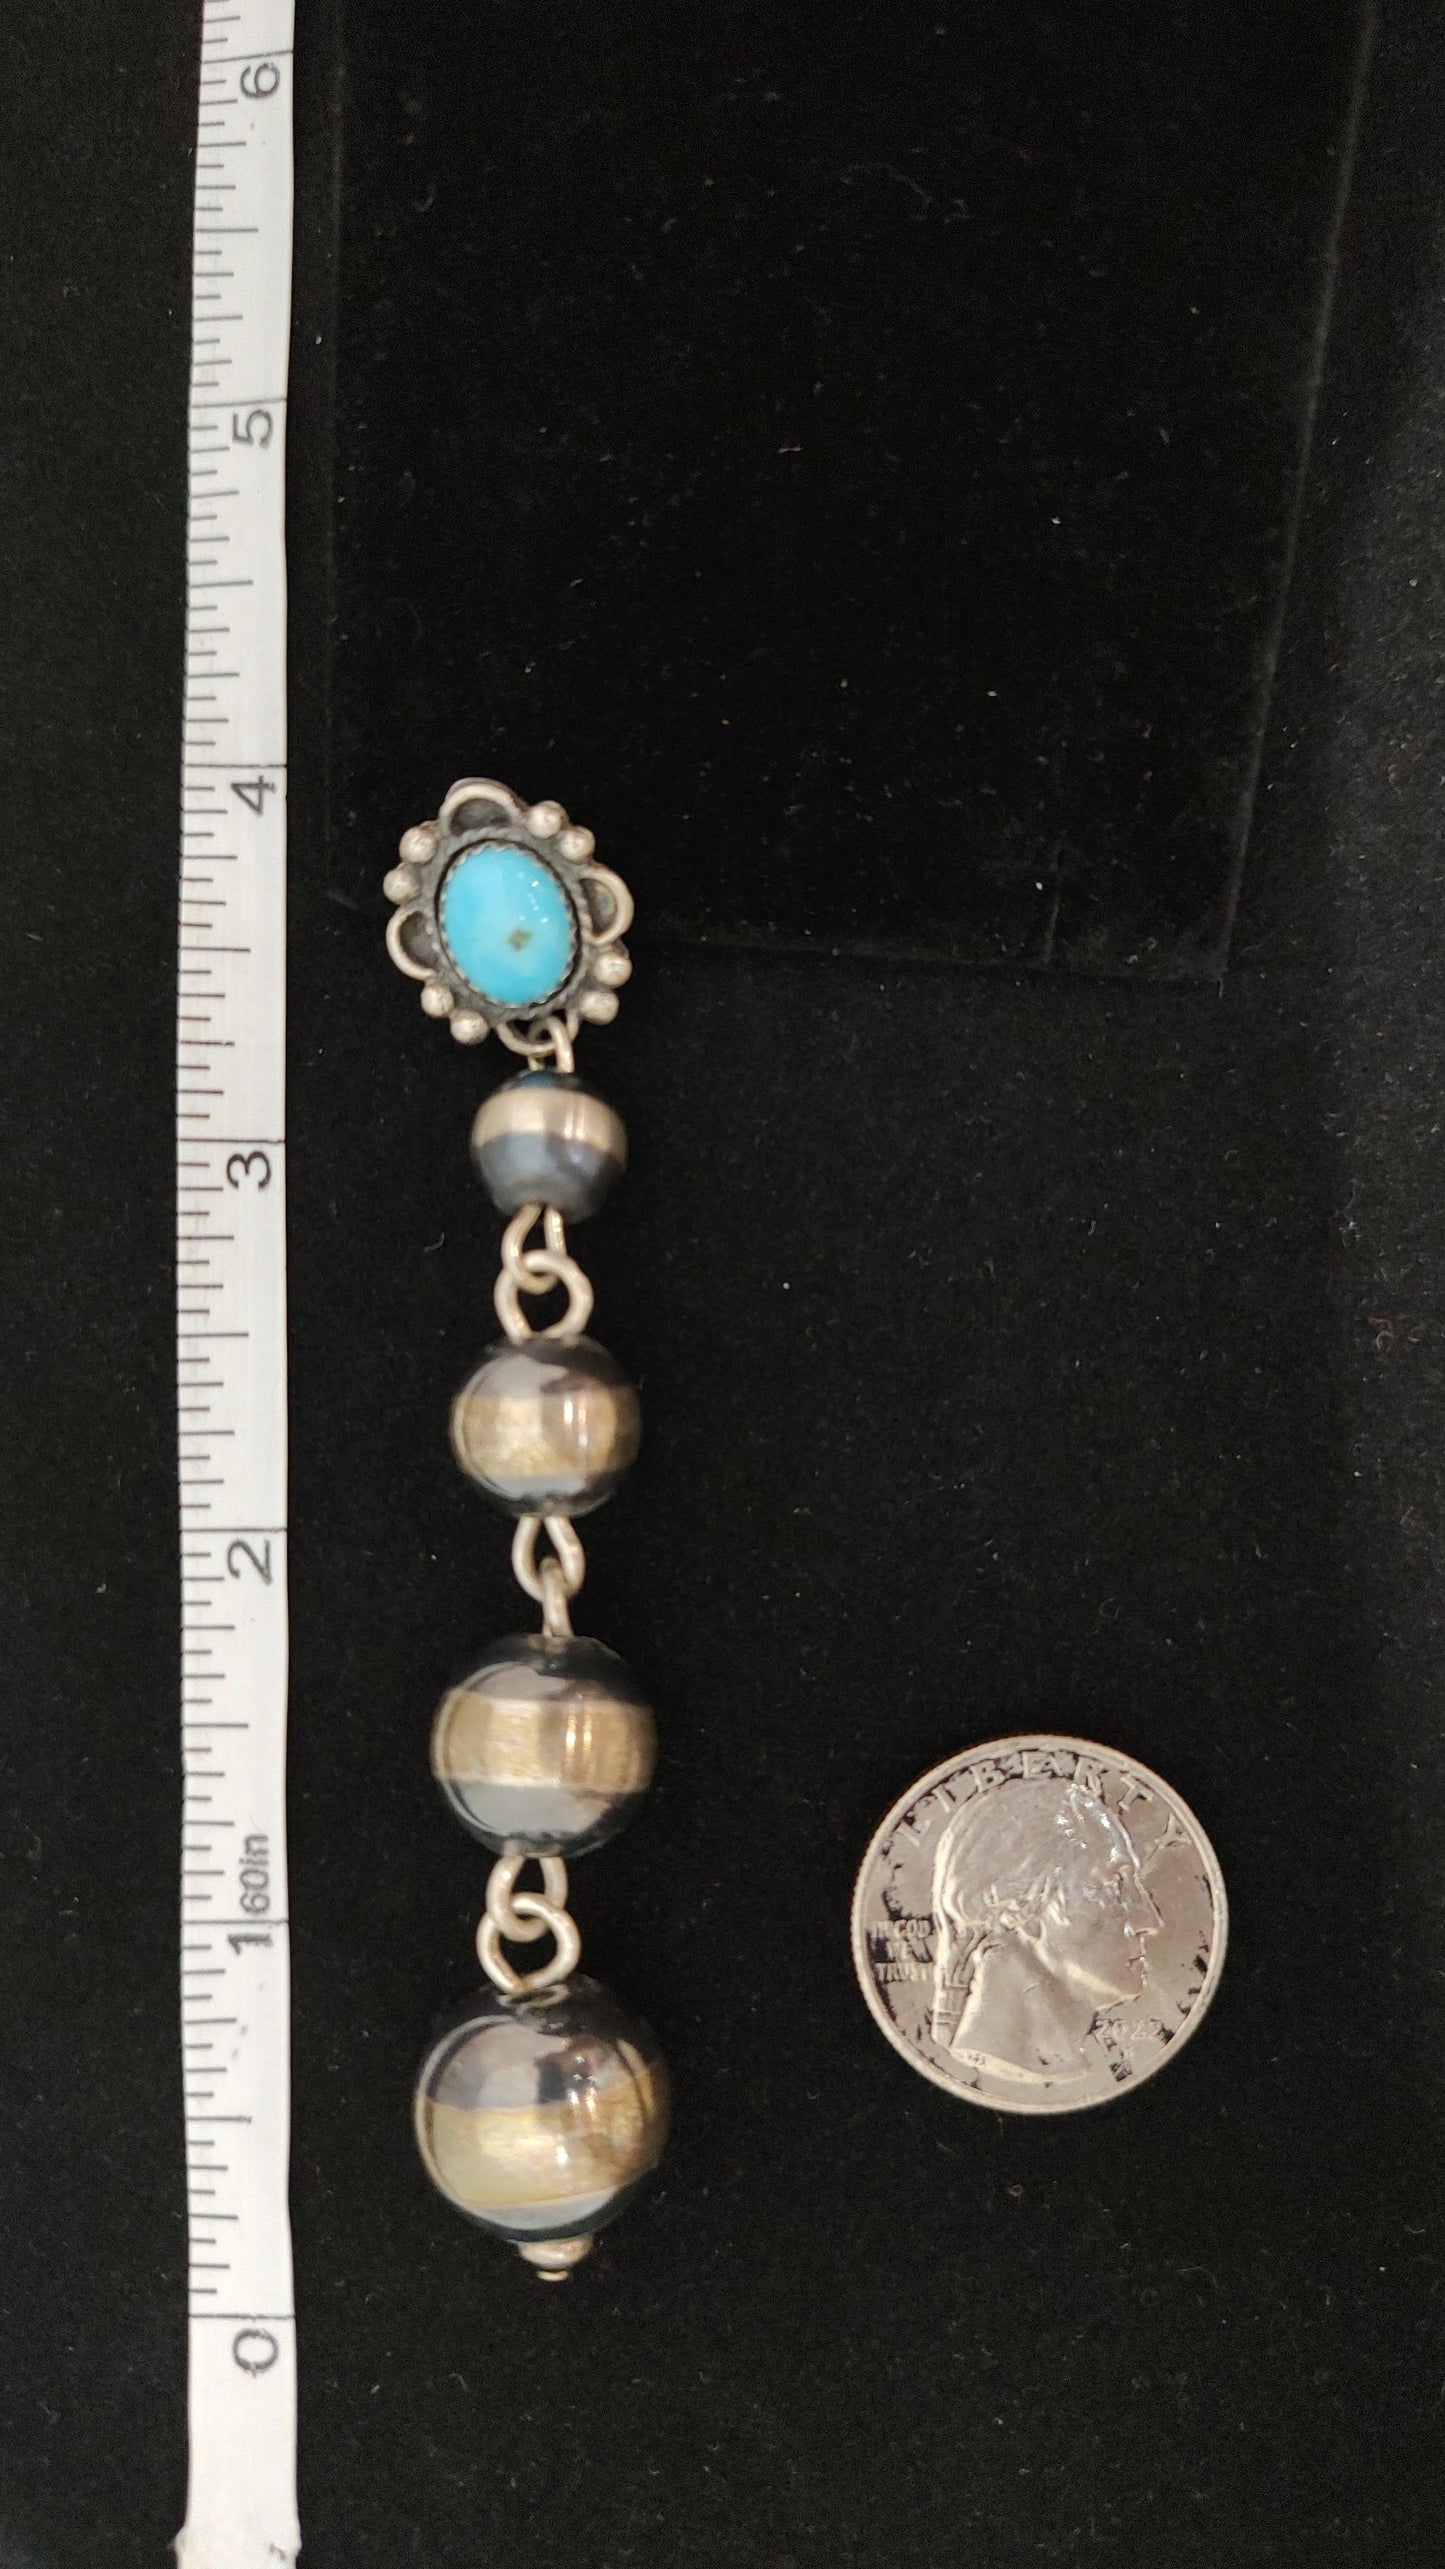 Oval Sleeping Beauty with Navajo Pearls on Post Earrings